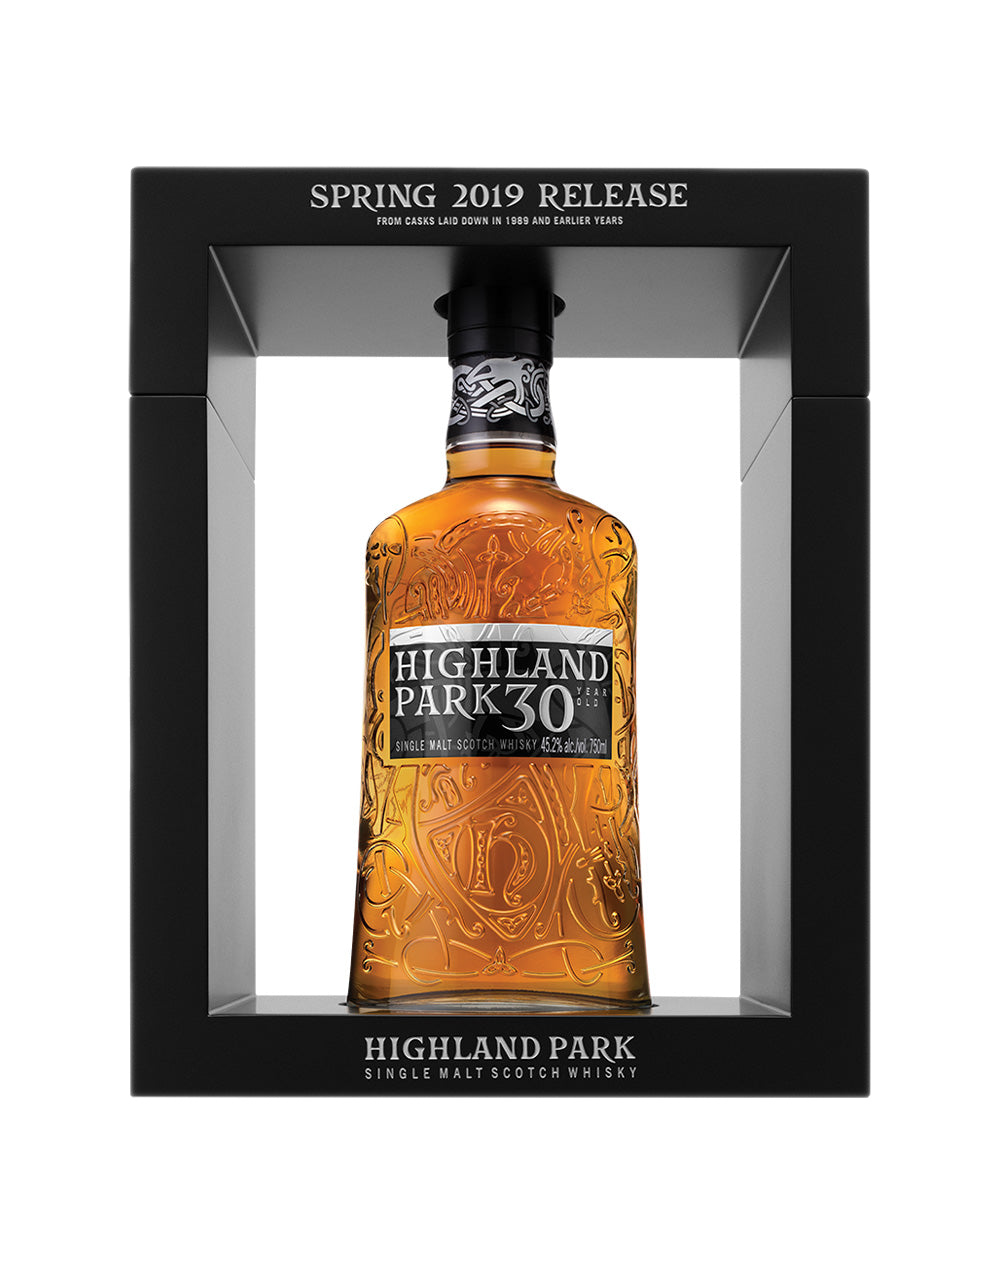 Buy Highland Park 21 YO Online- The Single Malt Shop